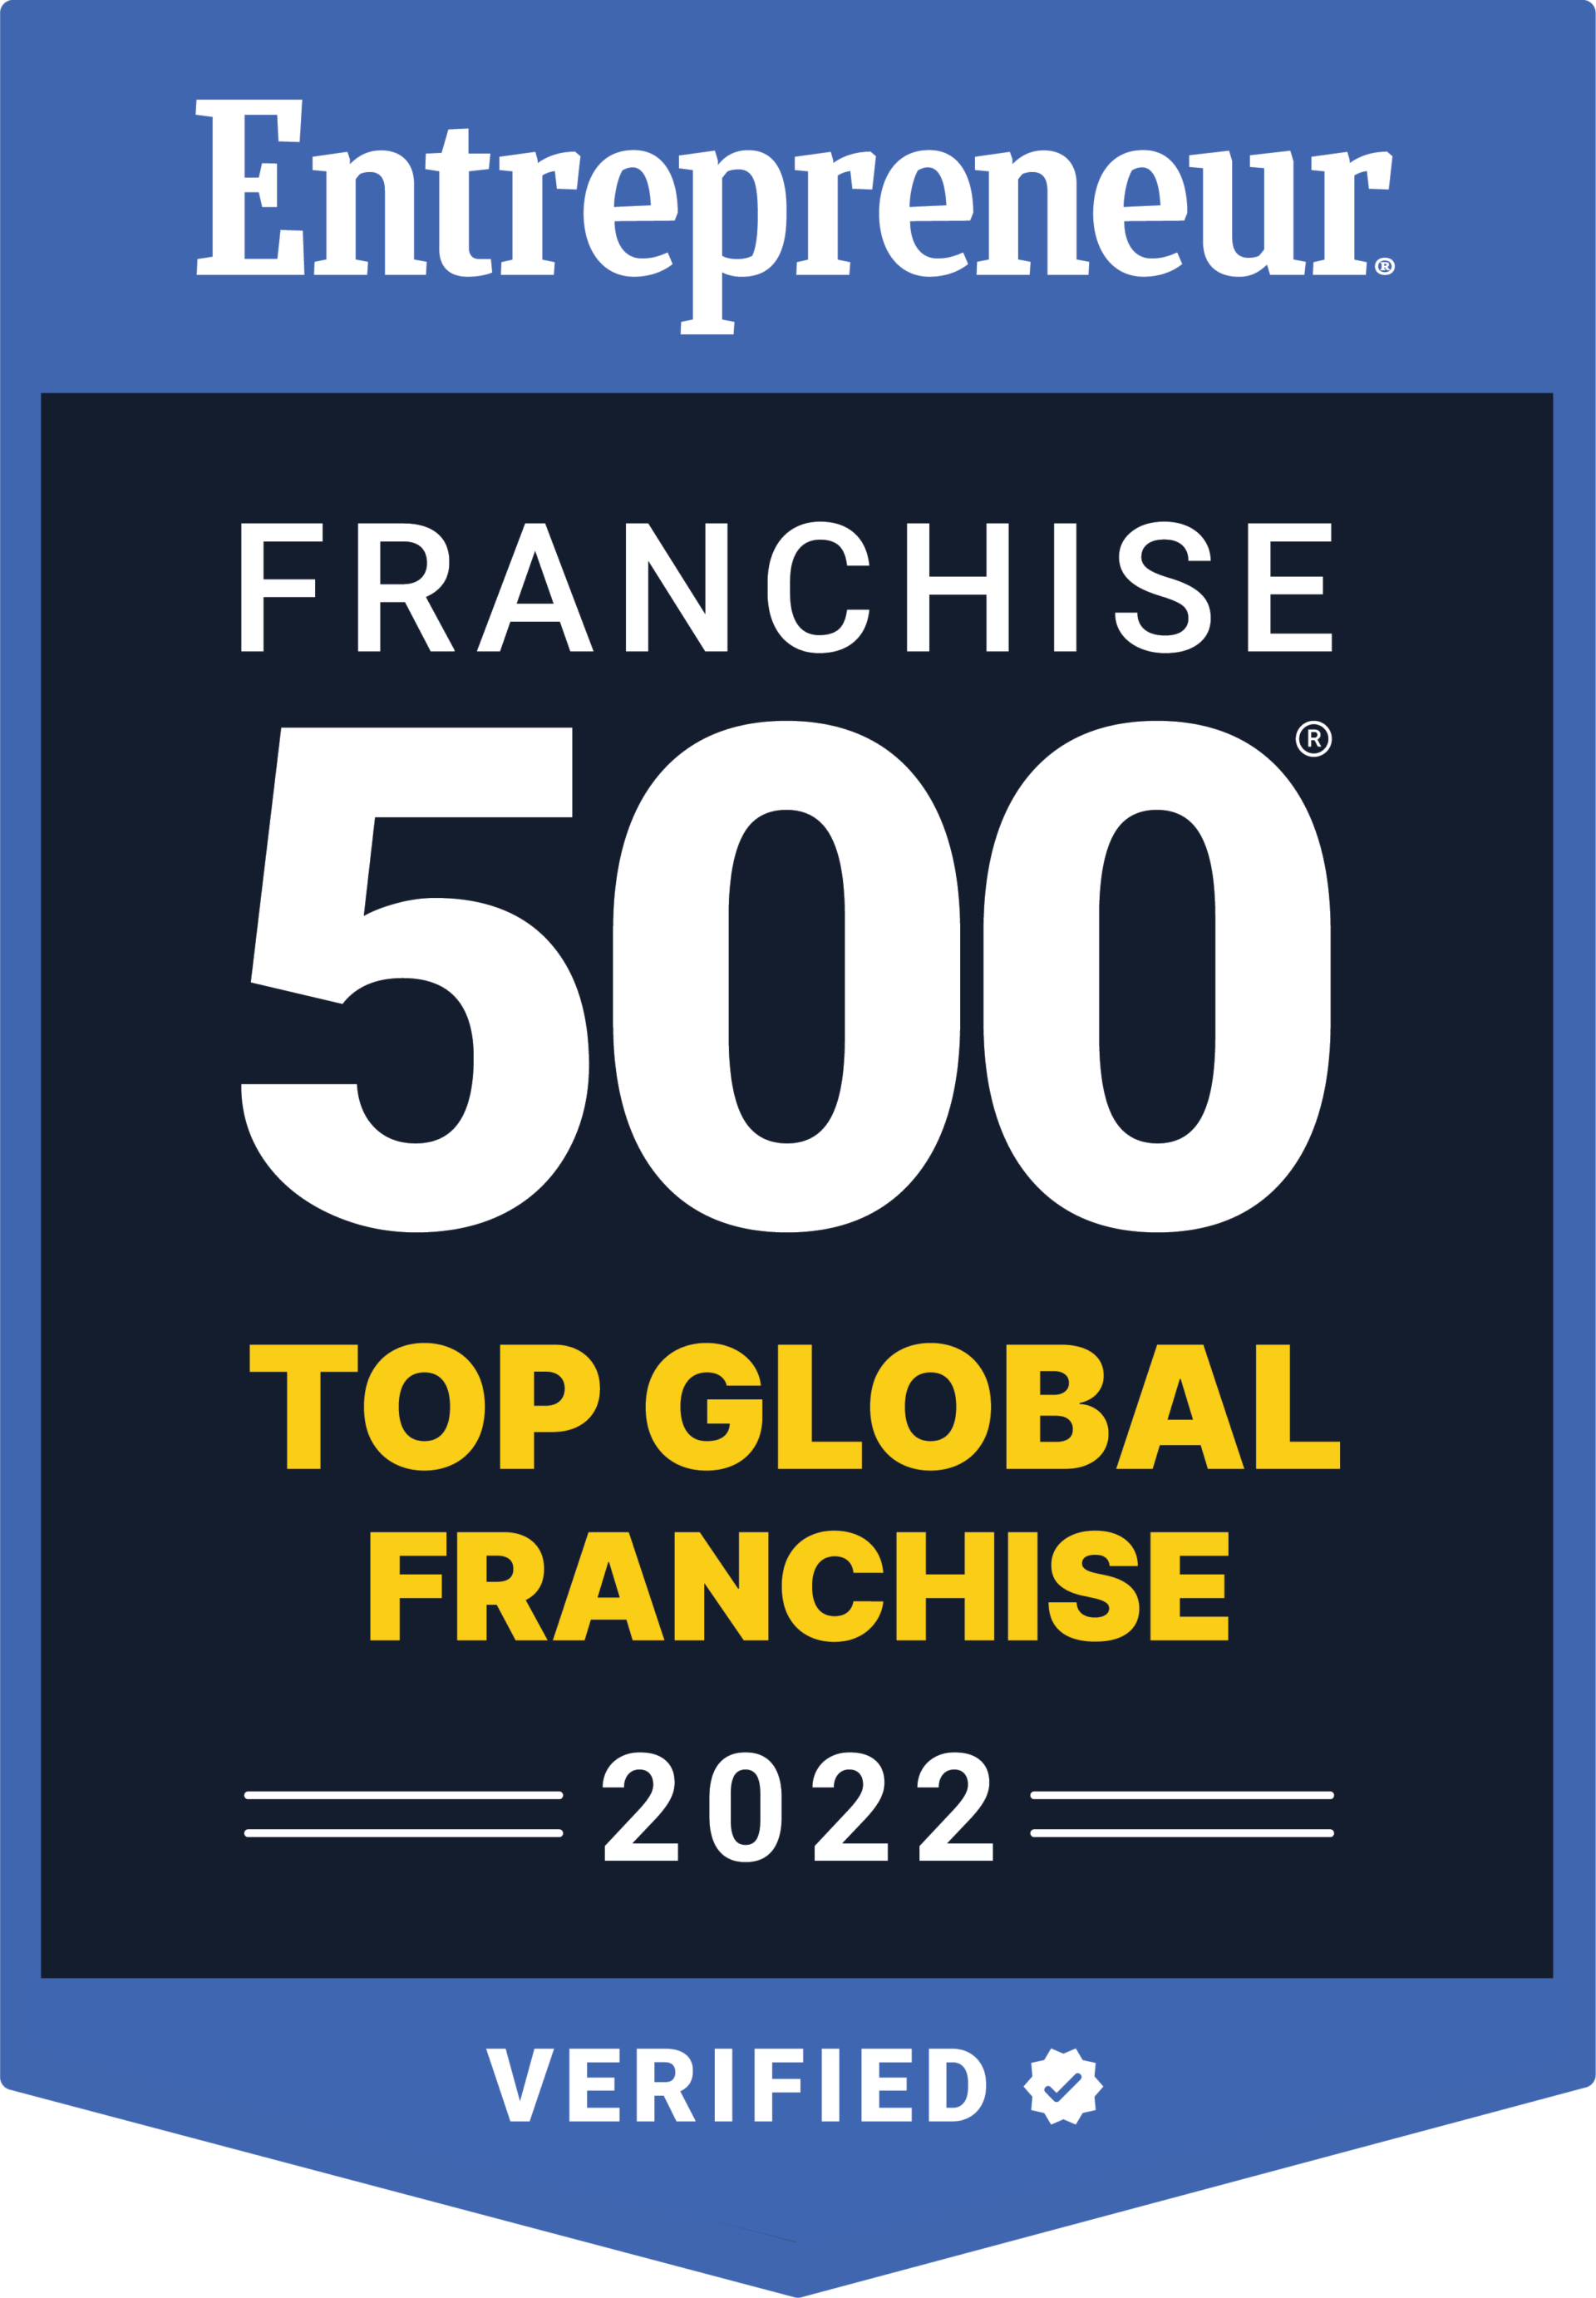 Entrepreneur Franchise 500 2022 Top Global Franchise logo